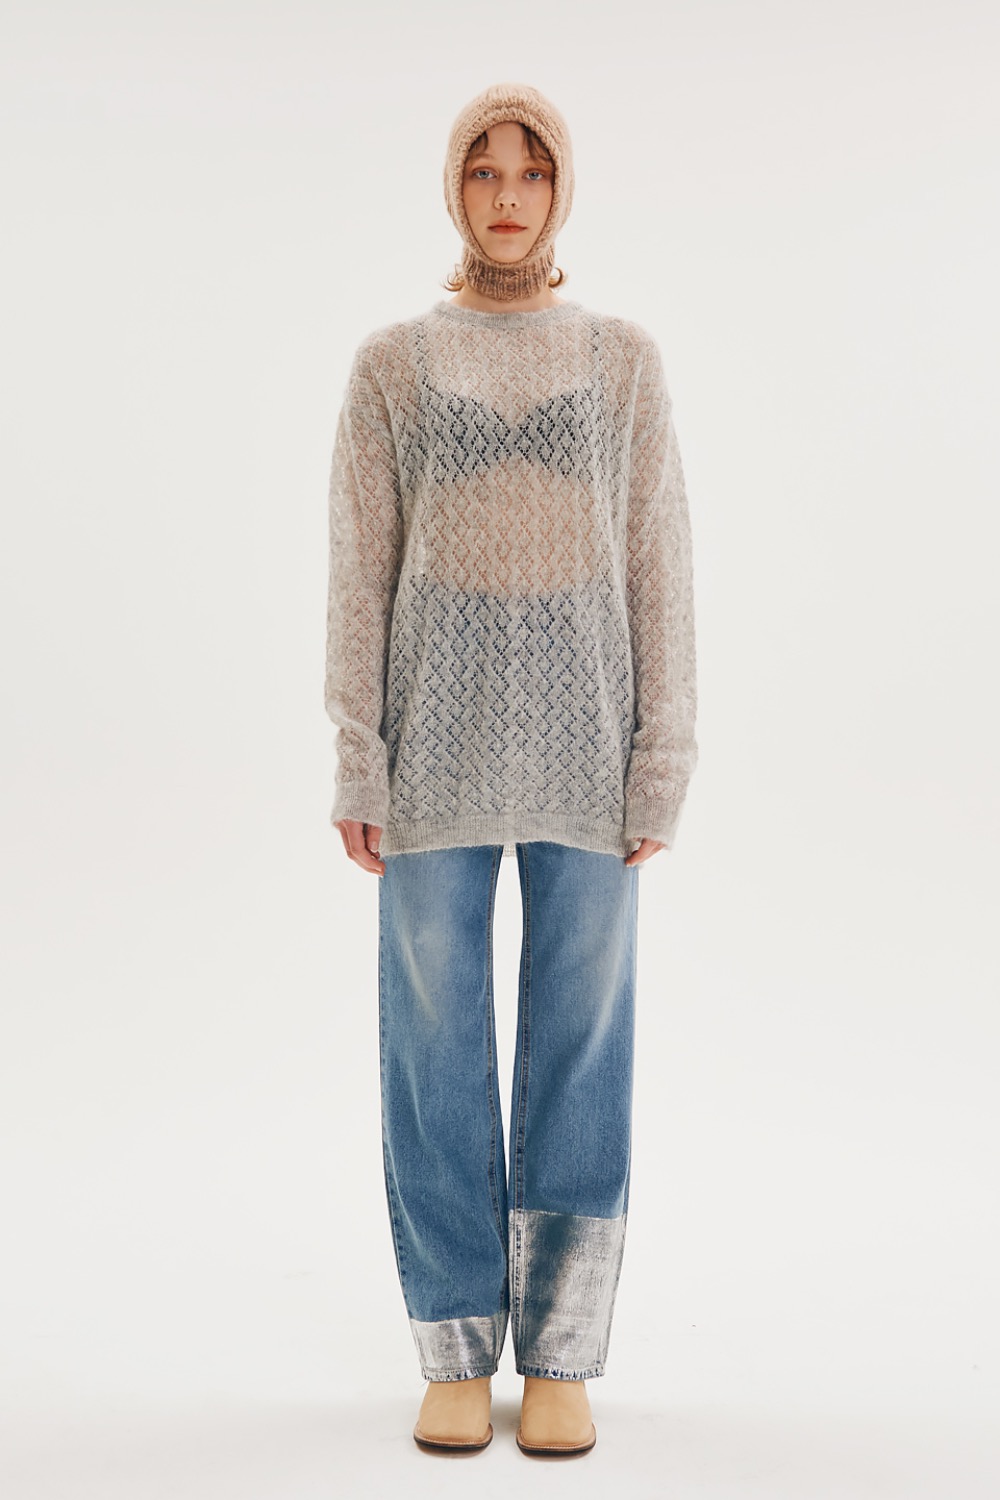 Mohair Scotch knit [Gray]